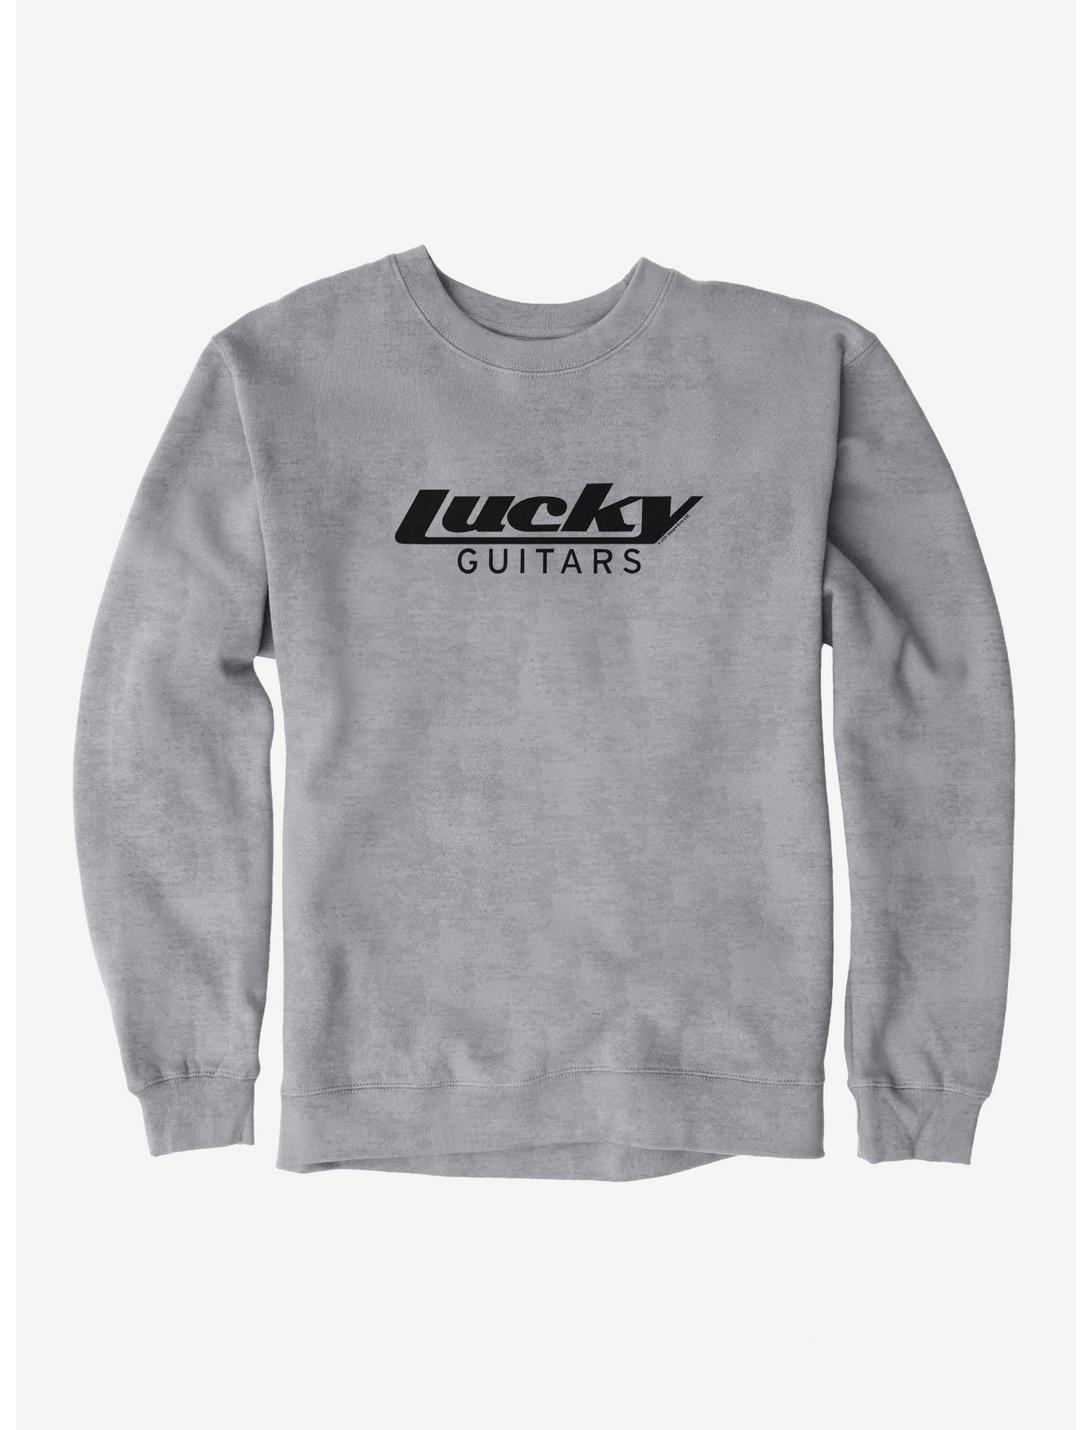 Square Enix Lucky Guitars Sweatshirt, HEATHER GREY, hi-res